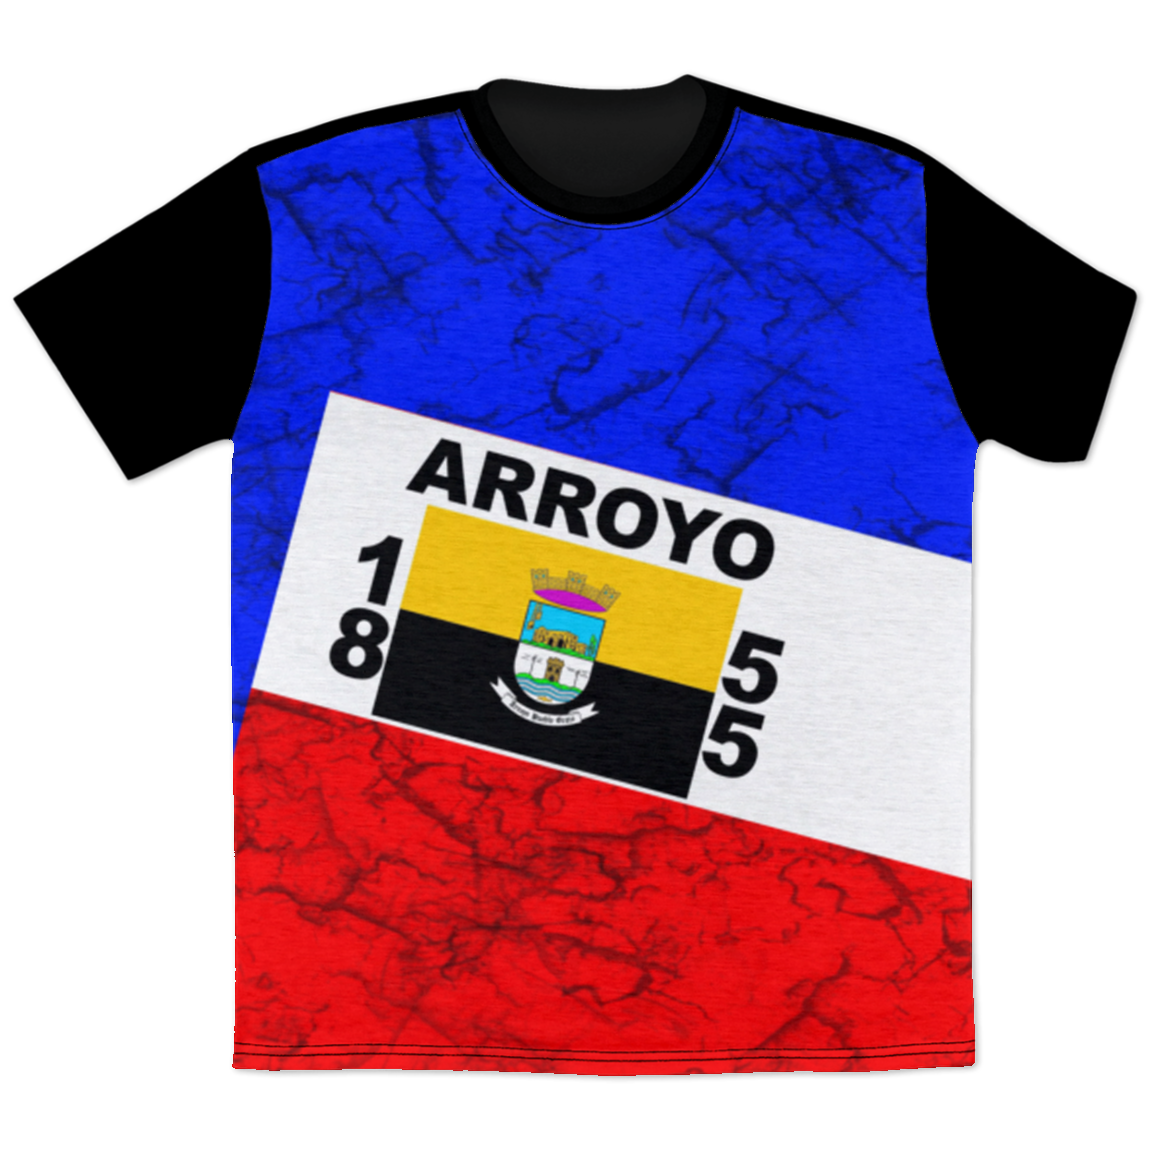 ArroyoT-Shirt - Puerto Rican Pride